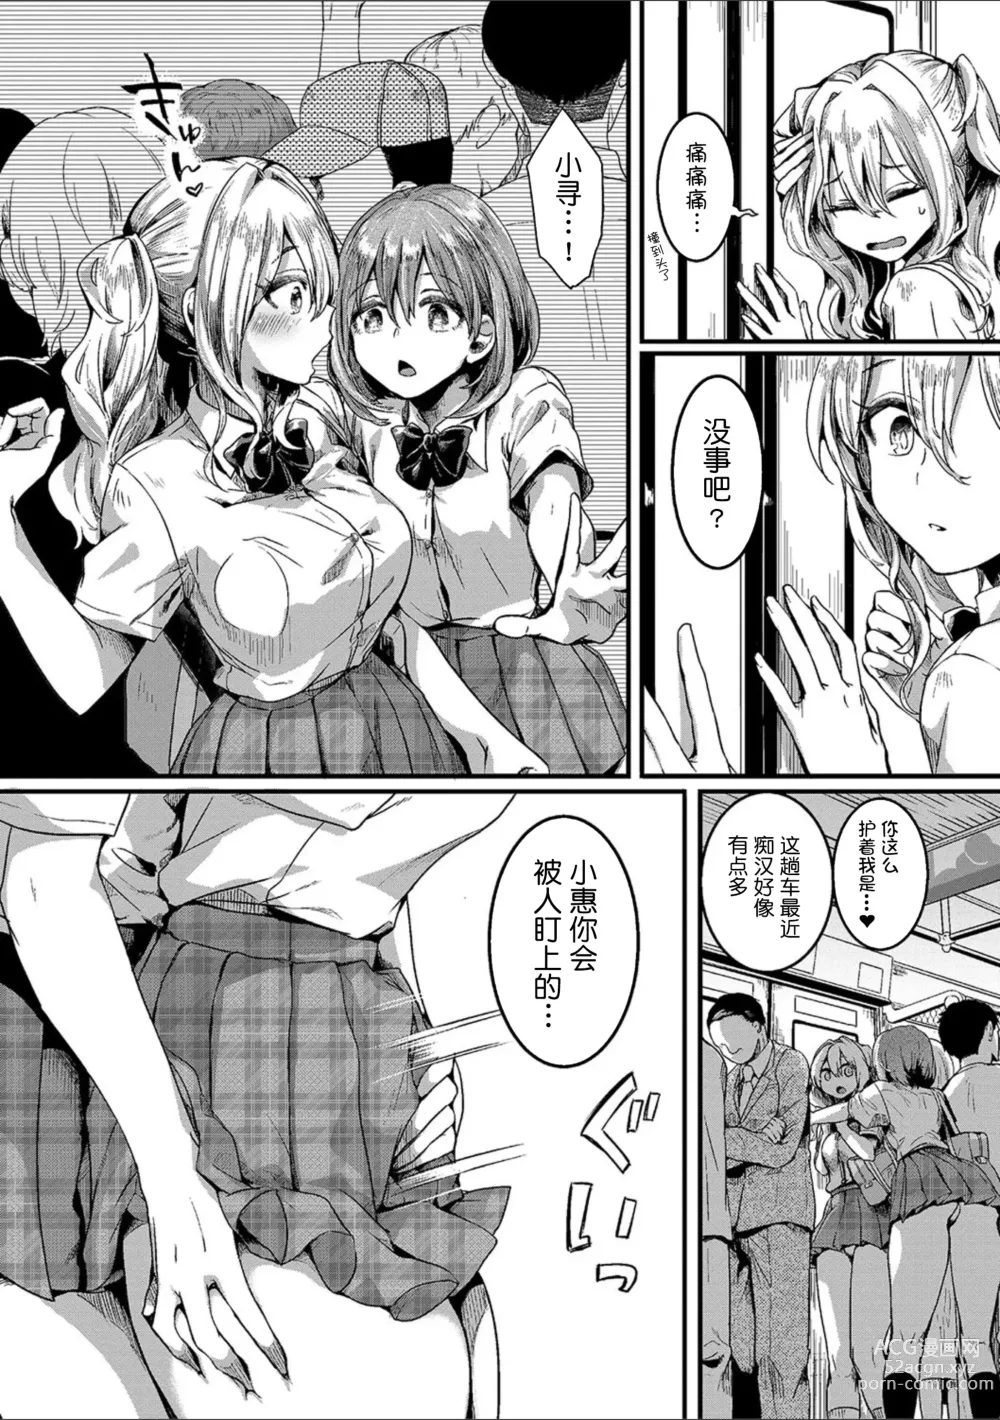 Page 9 of manga Watashi wa Onnanoko ga Suki datta Hazu nano ni - But I fell in with something different.